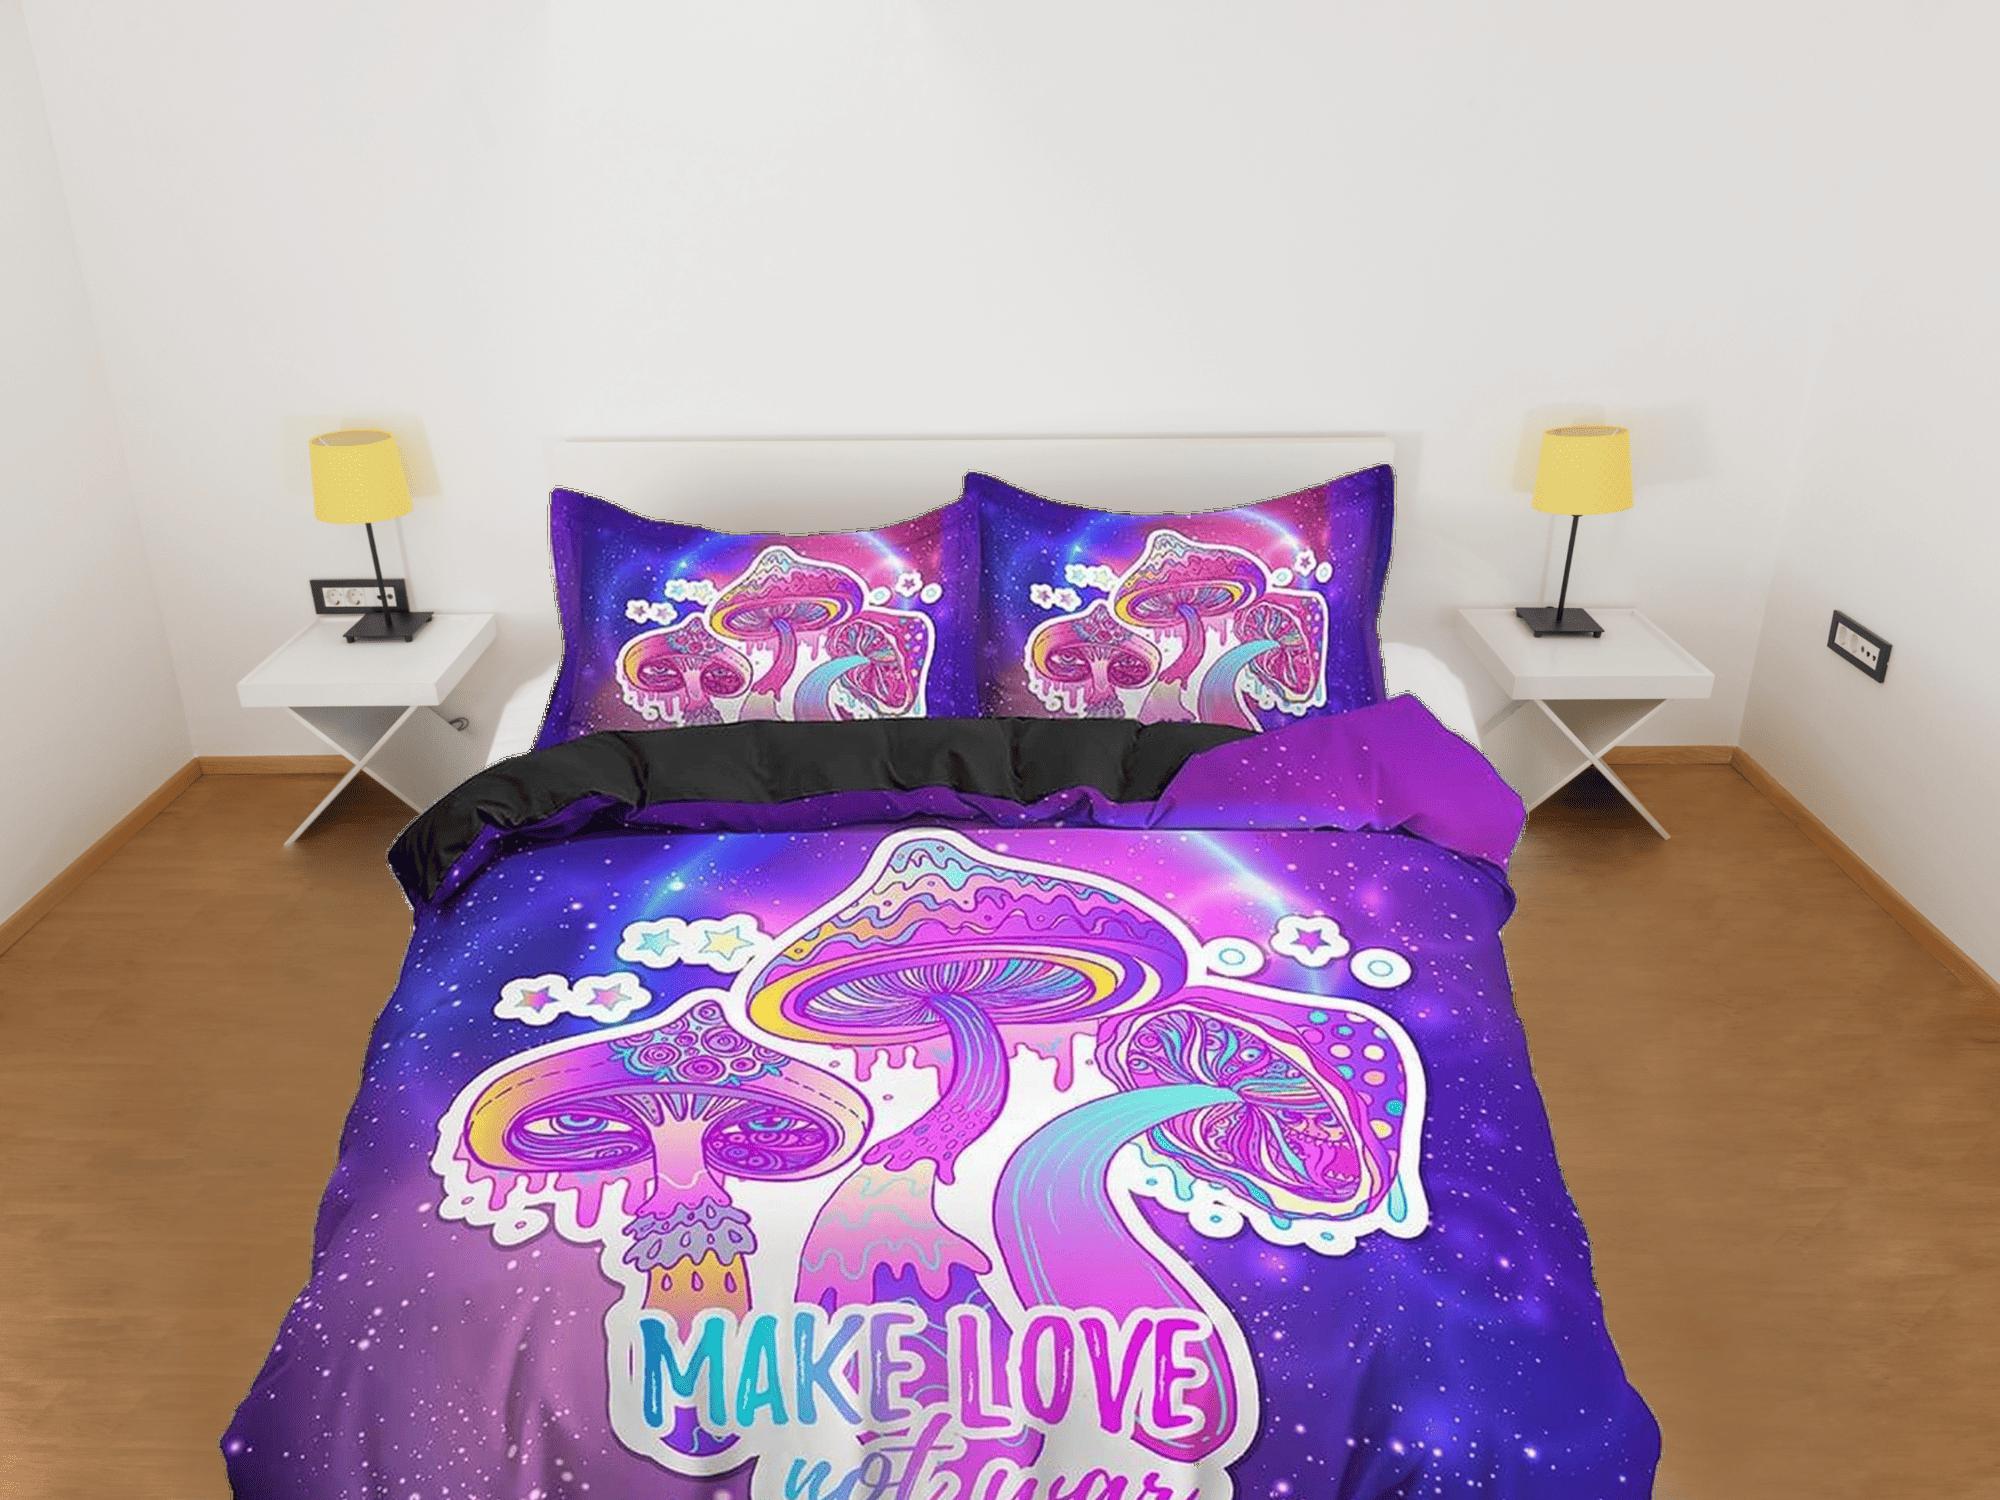 daintyduvet Make love not war psychedelic mushroom duvet cover hippie bedding set full, preppy dorm bedding, indie room decor, aesthetic bedspread y2k